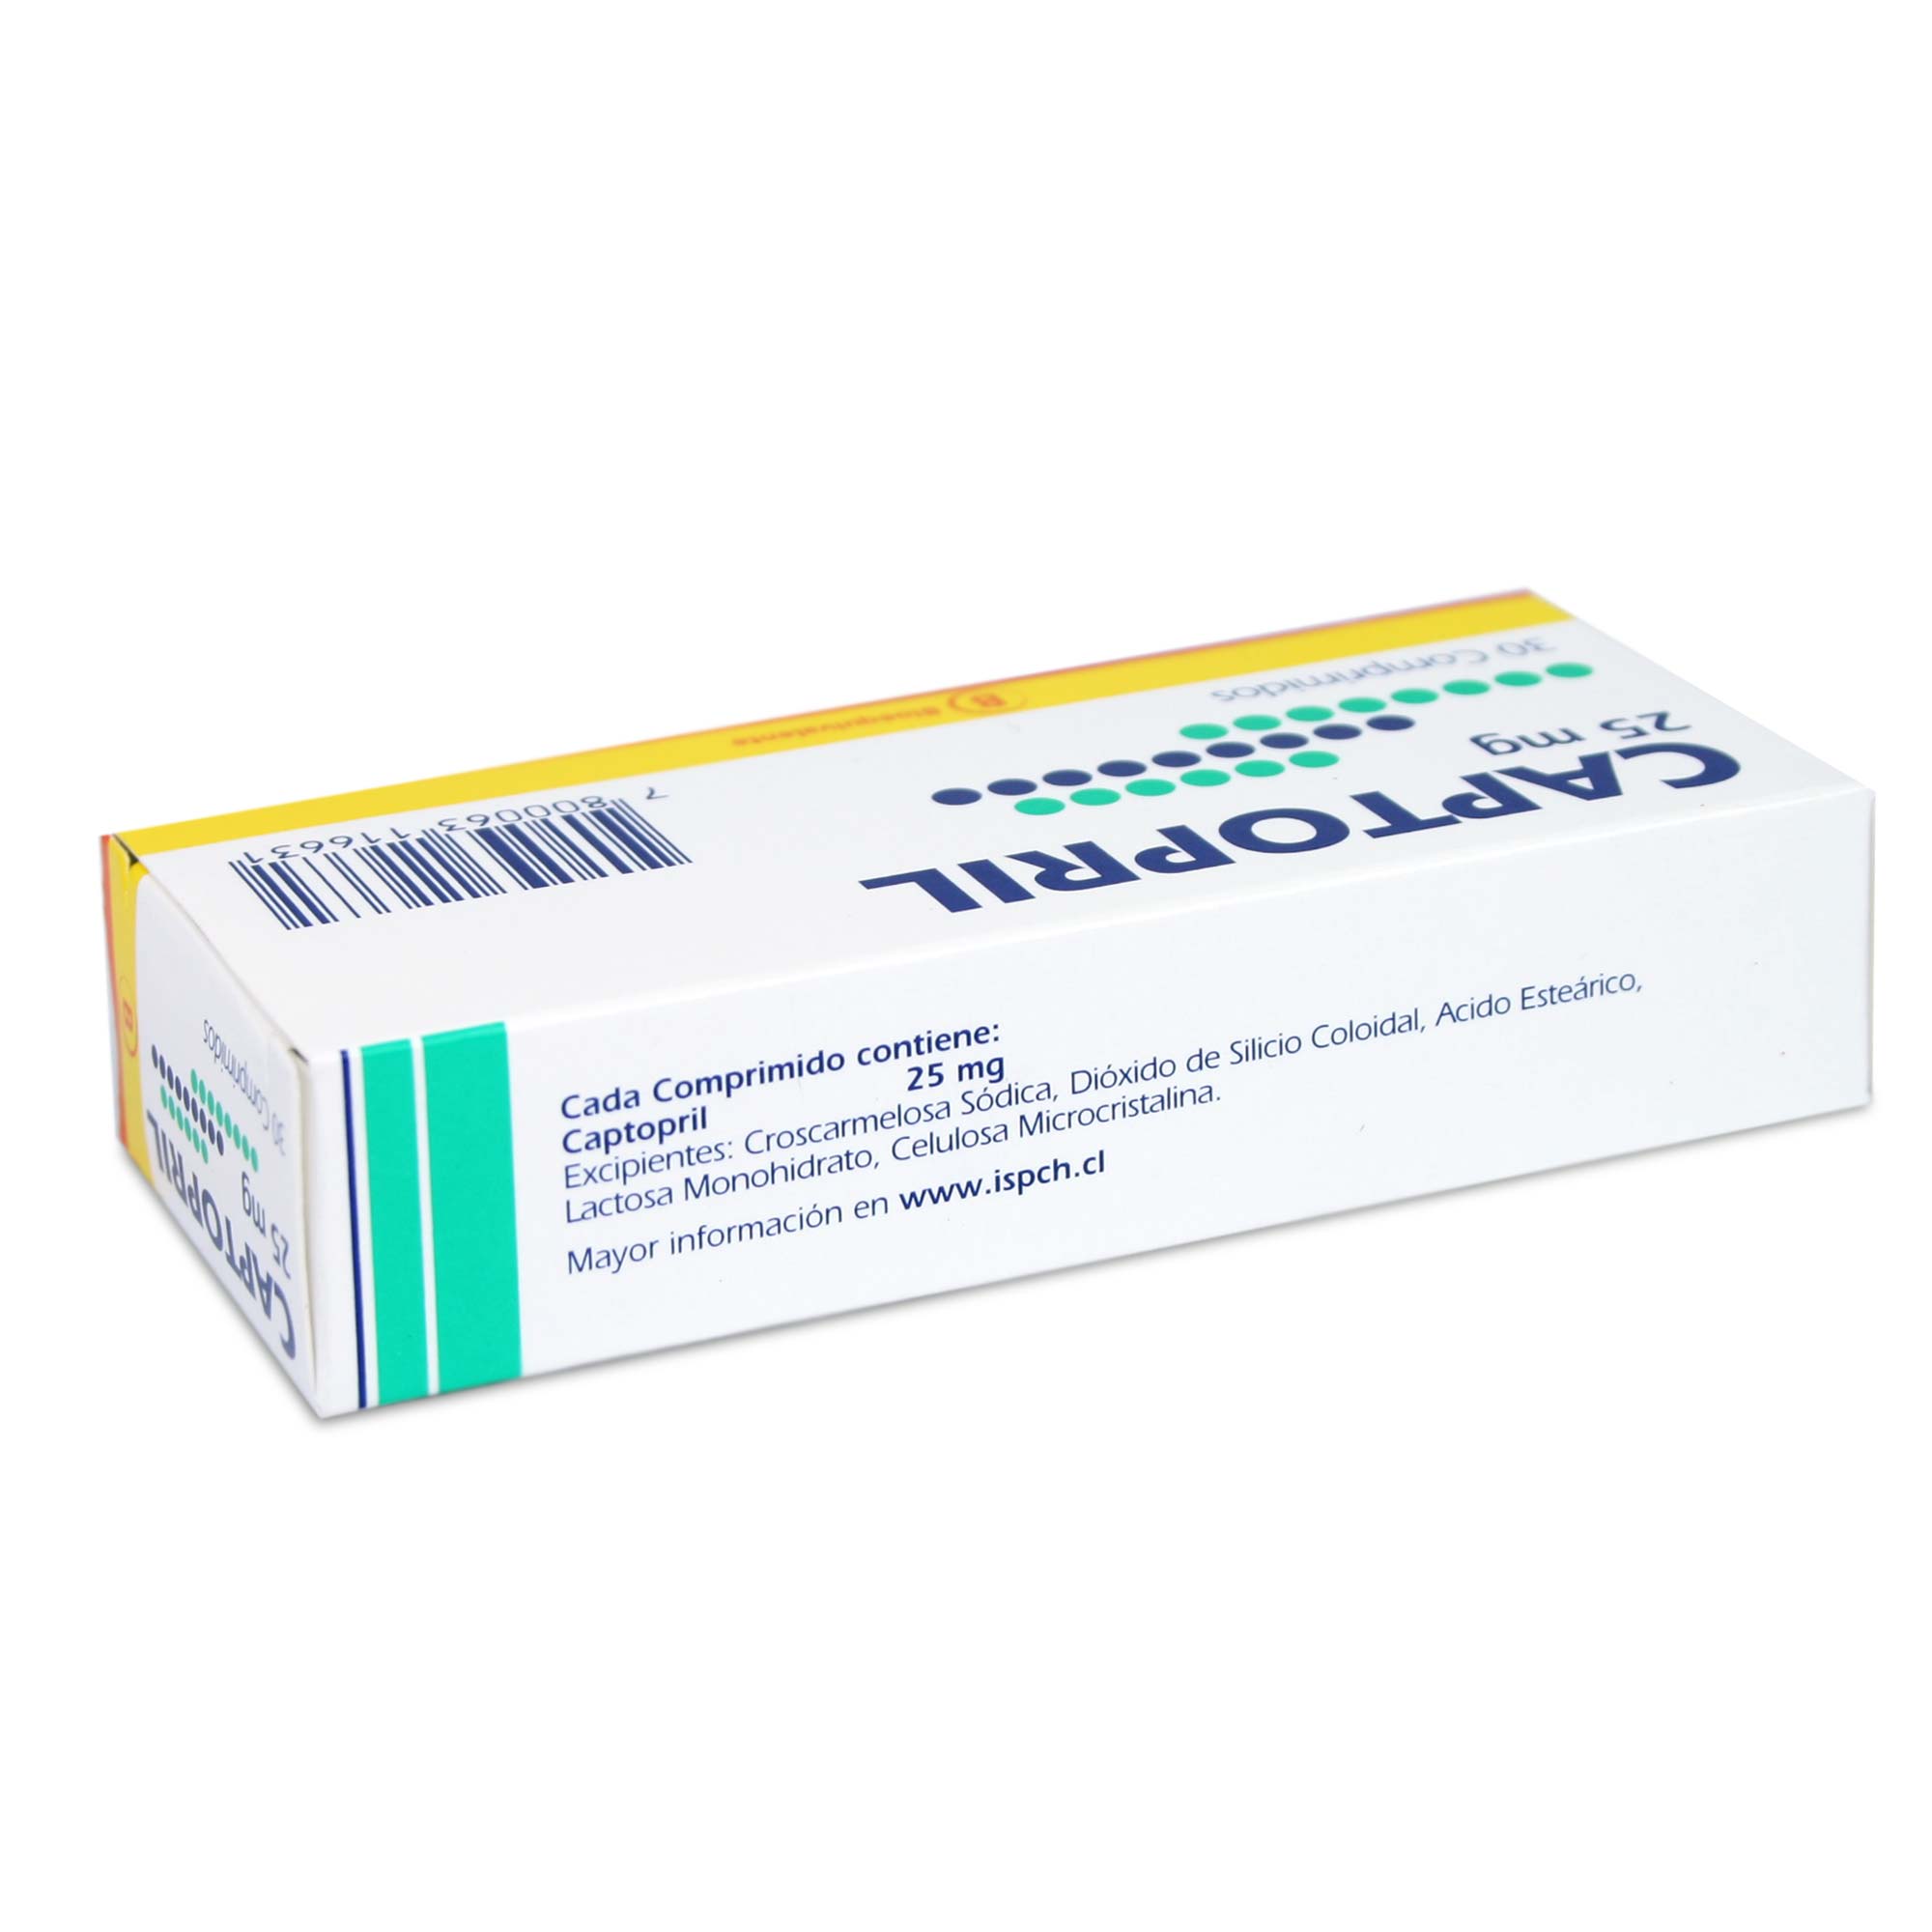 Captopril 25 mg 30 Comprimidos | Farmacias Cruz Verde